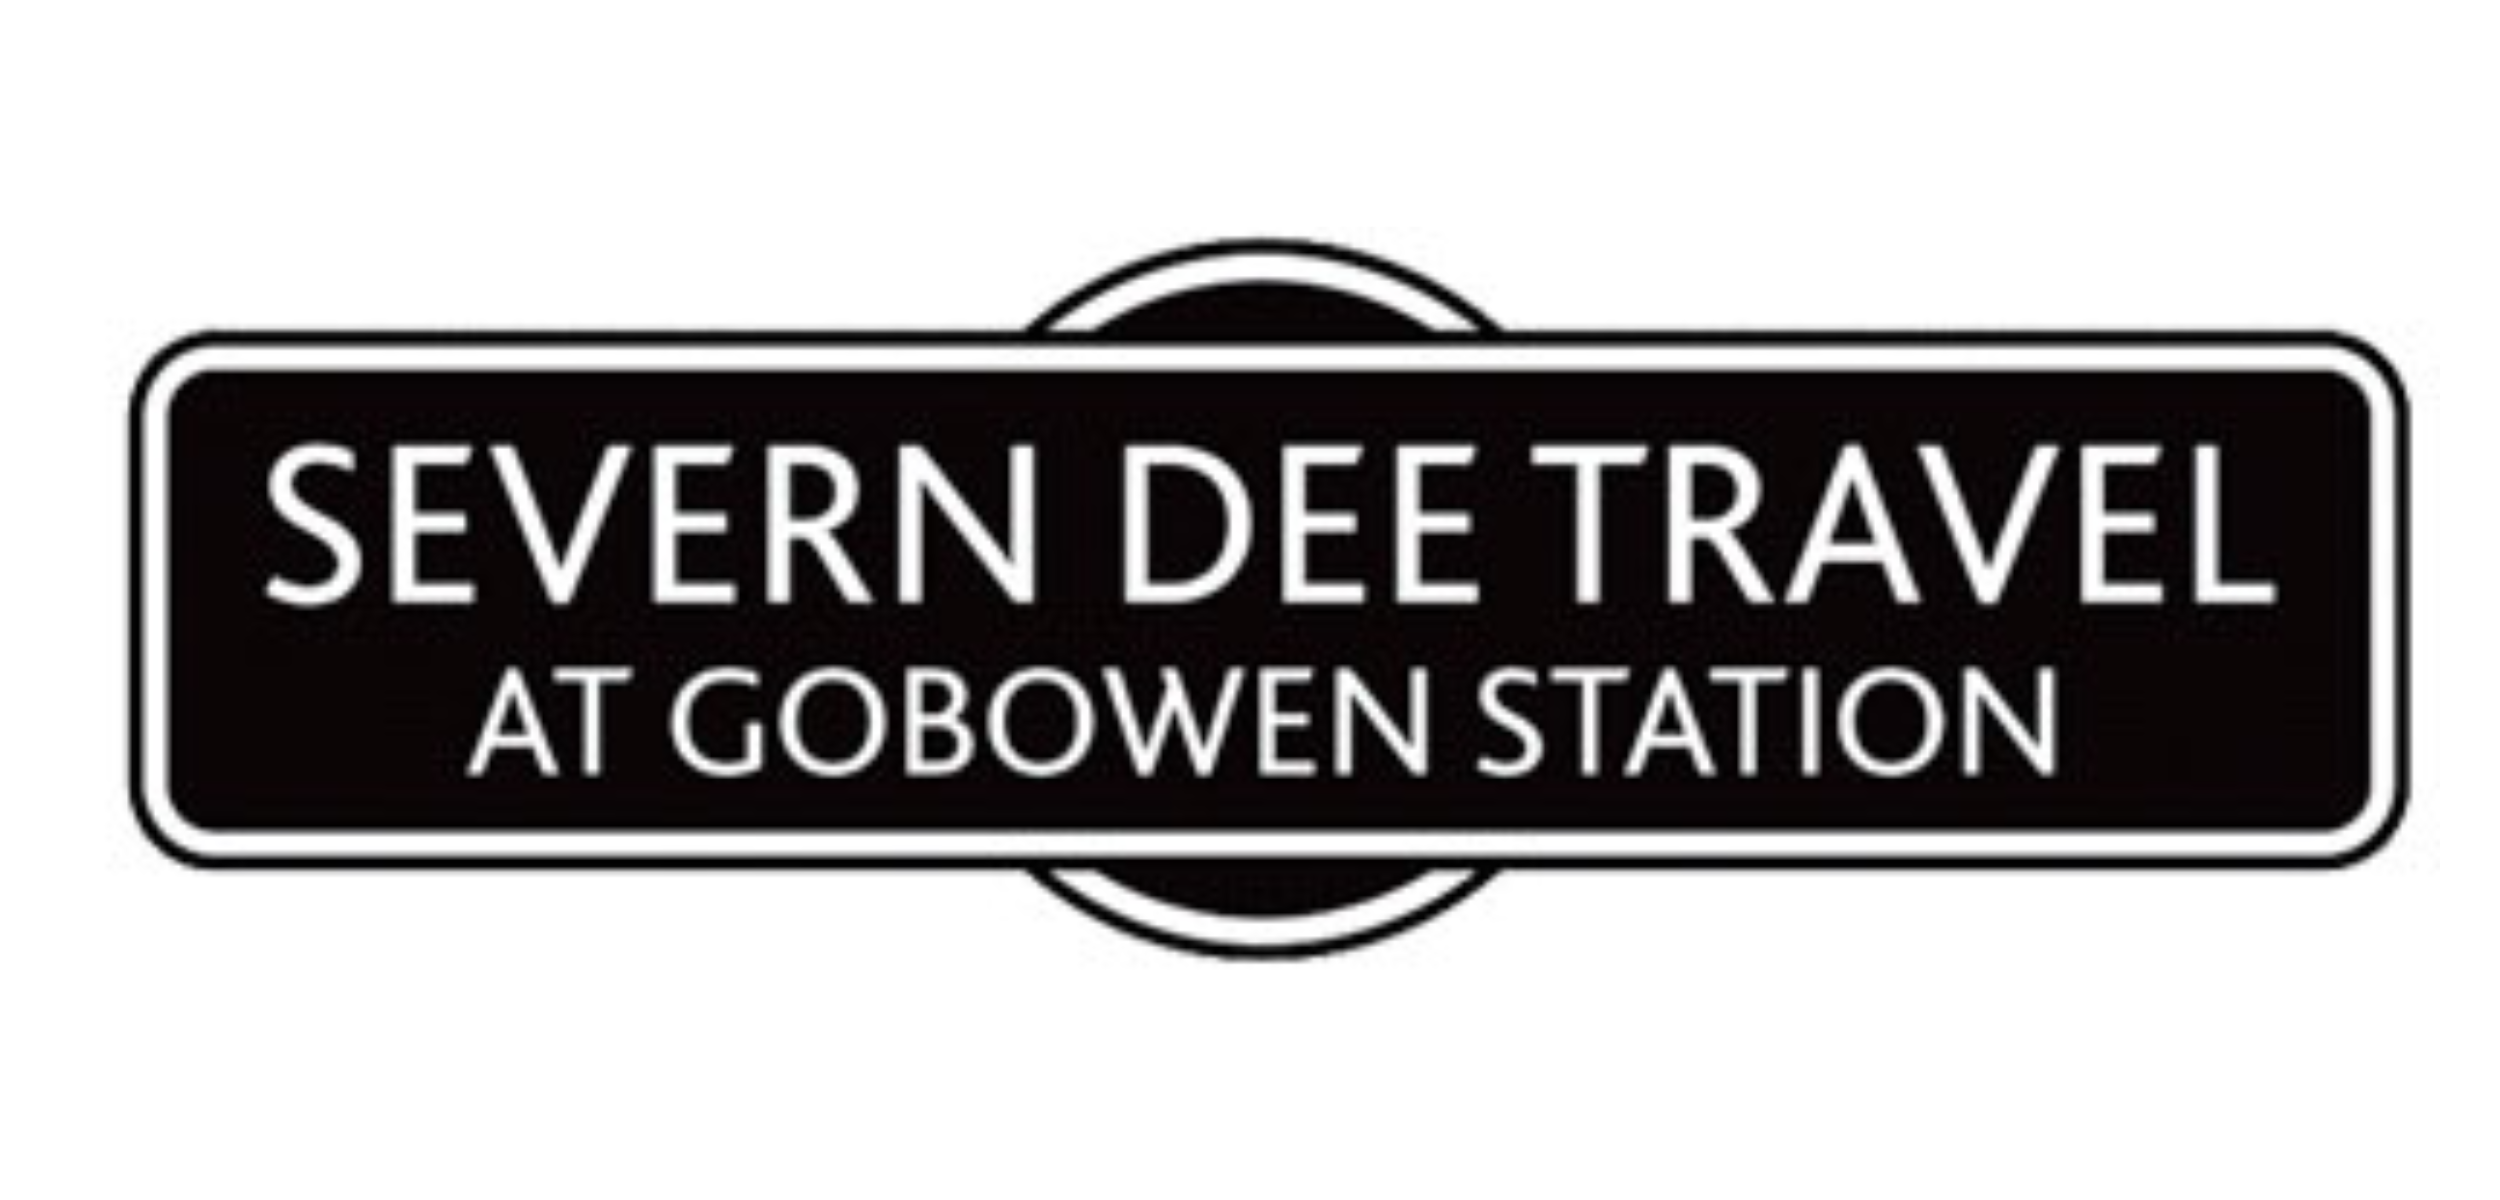 Severn Dee Travel P&S logo (2500 x 1200 px)